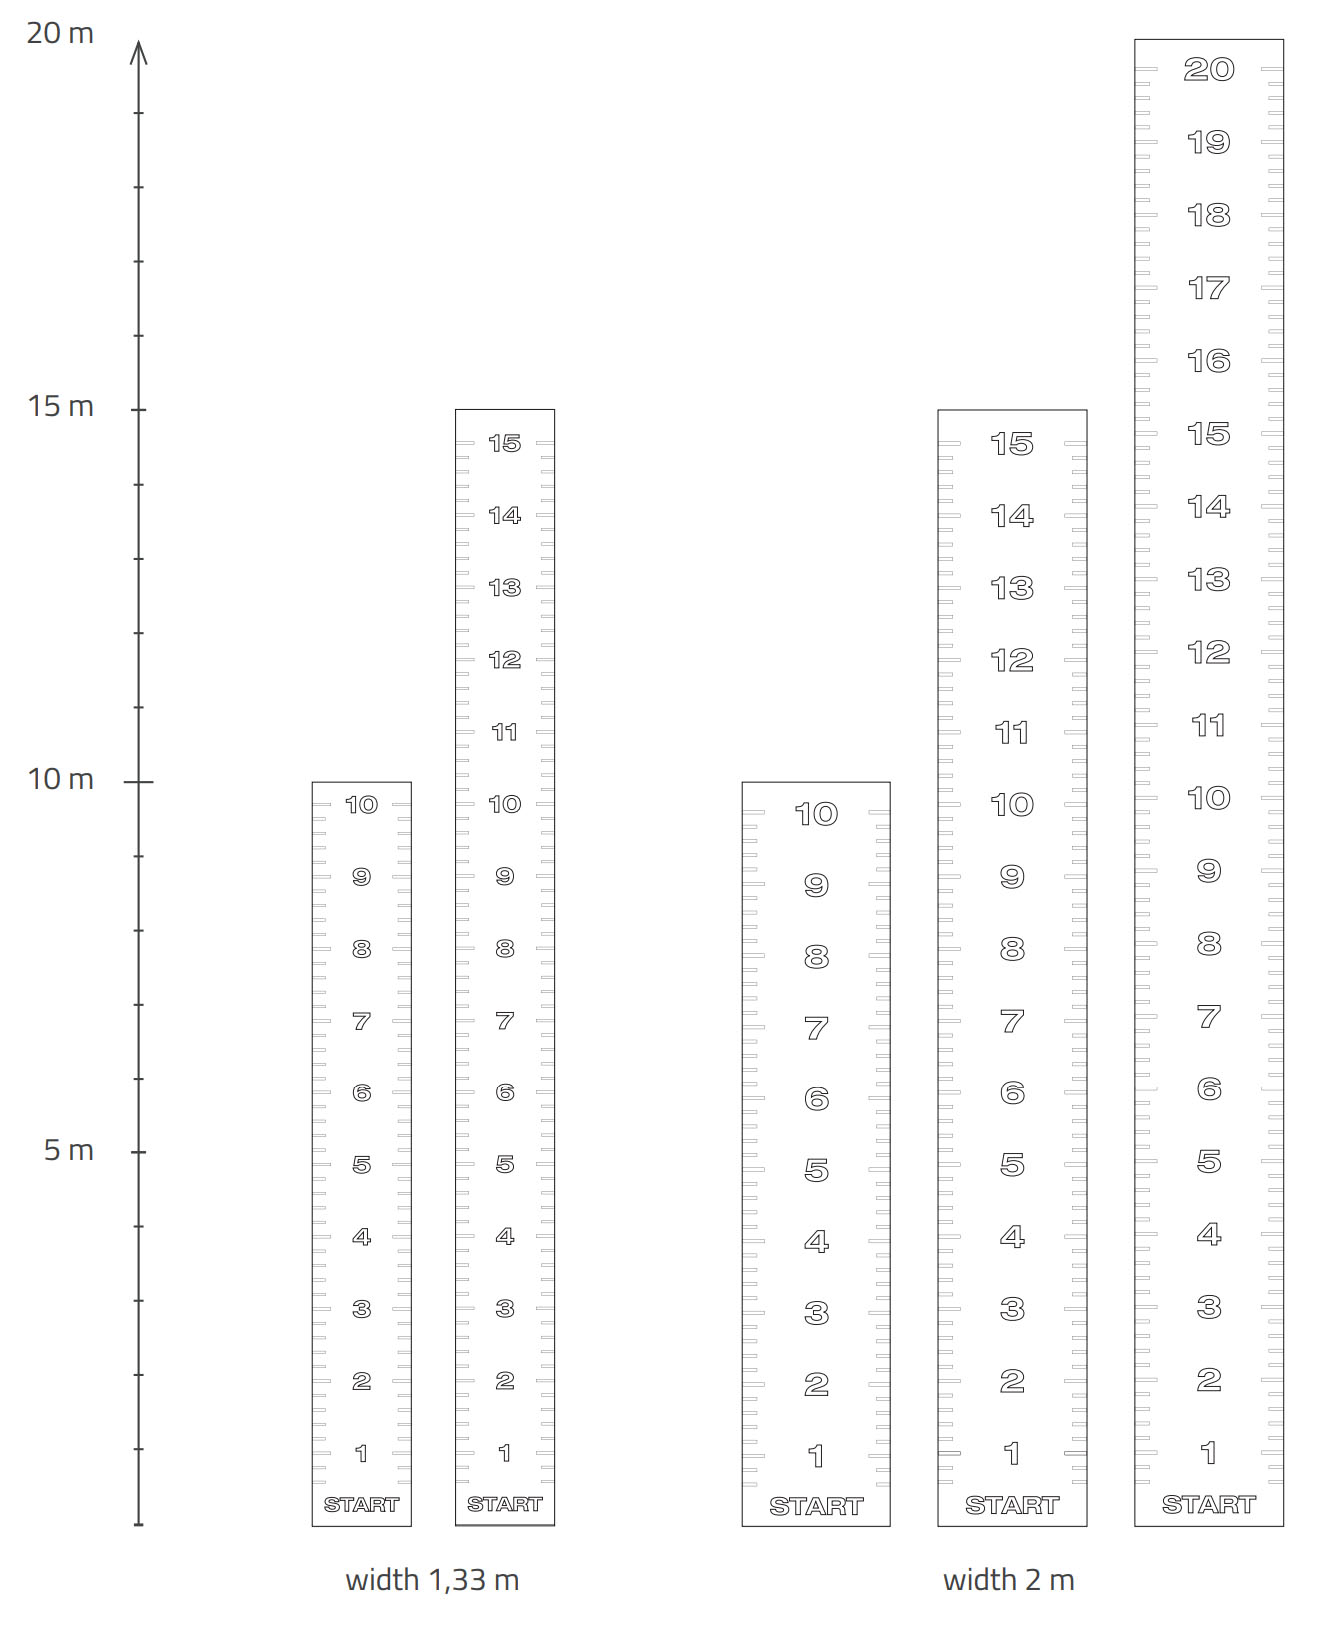 grafiek lengte sprinttrack